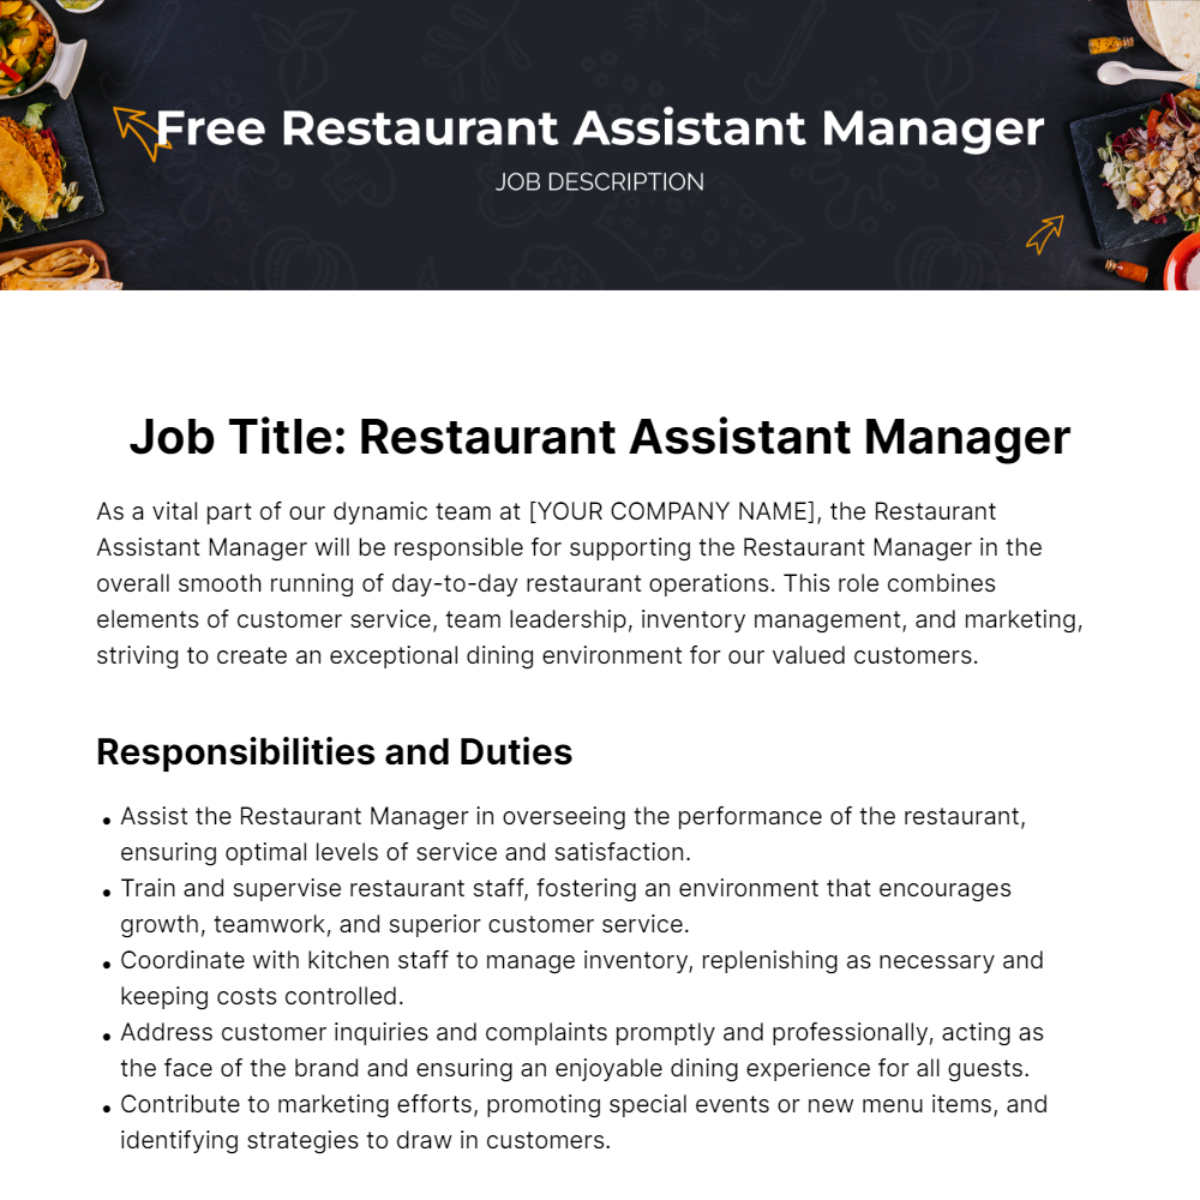 Restaurant Assistant Manager Job Description Template